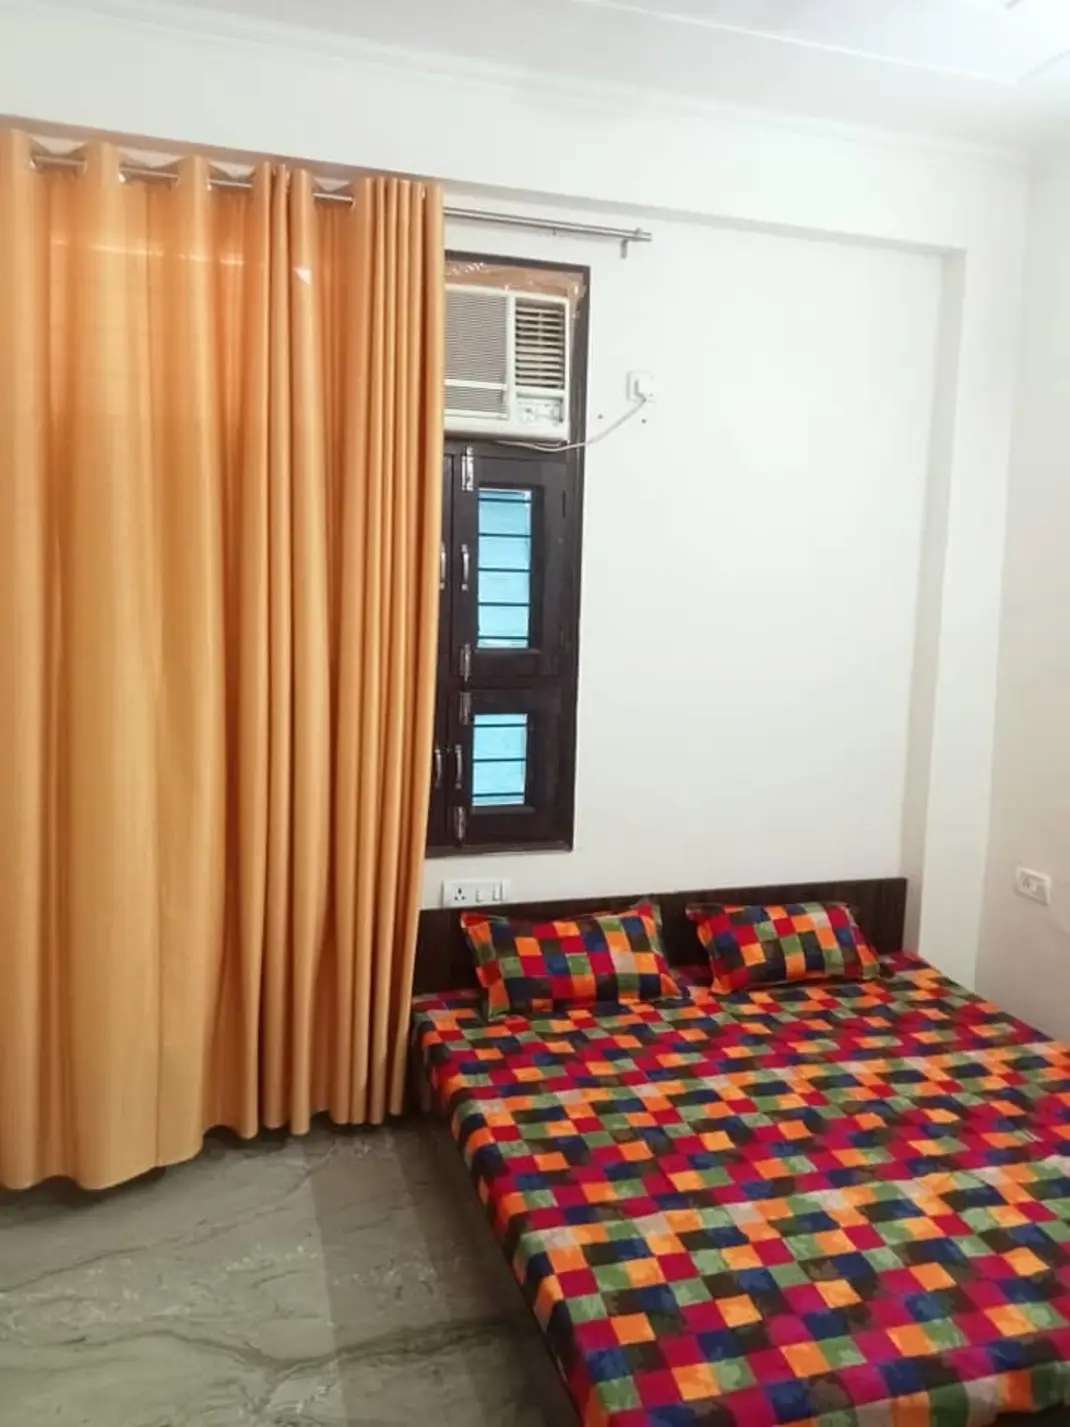 2 Bed/ 2 Bath Rent Apartment/ Flat; 900 sq. ft. carpet area, Furnished for rent @Sector 46 gurugram 